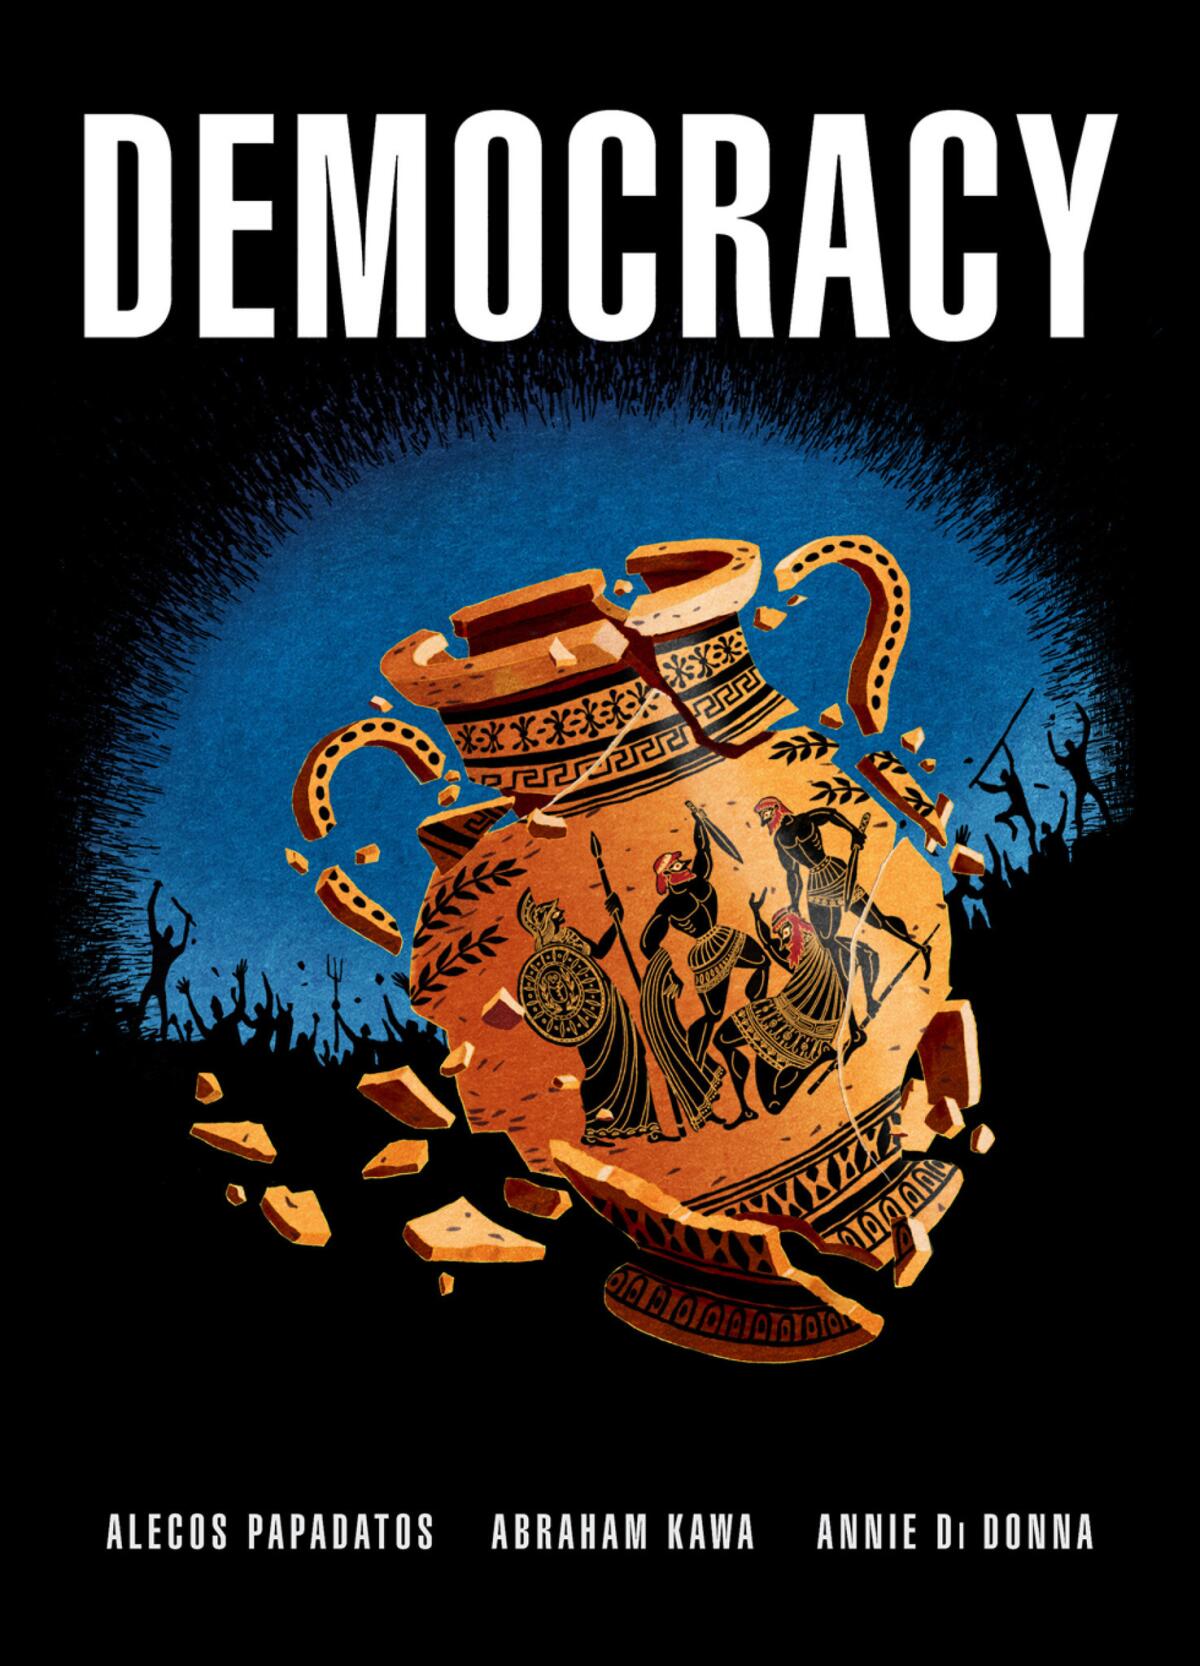 "Democracy" by Alecos Papadatos, Abraham Kawa and Annie Di Donna